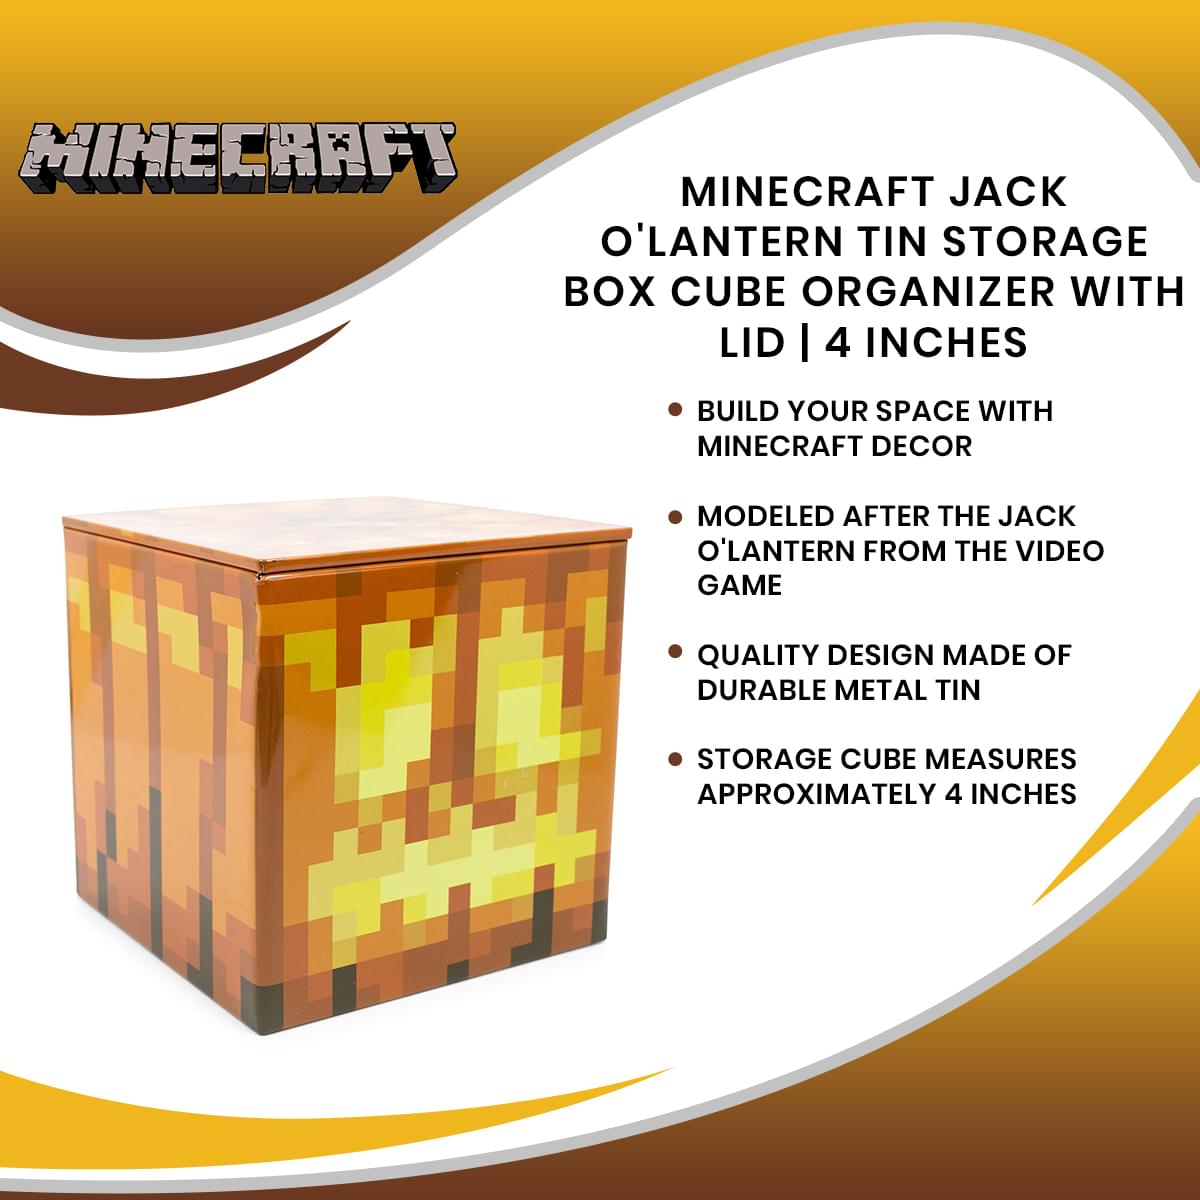 Minecraft Jack O'Lantern Tin Storage Box Cube Organizer with Lid | 4 Inches